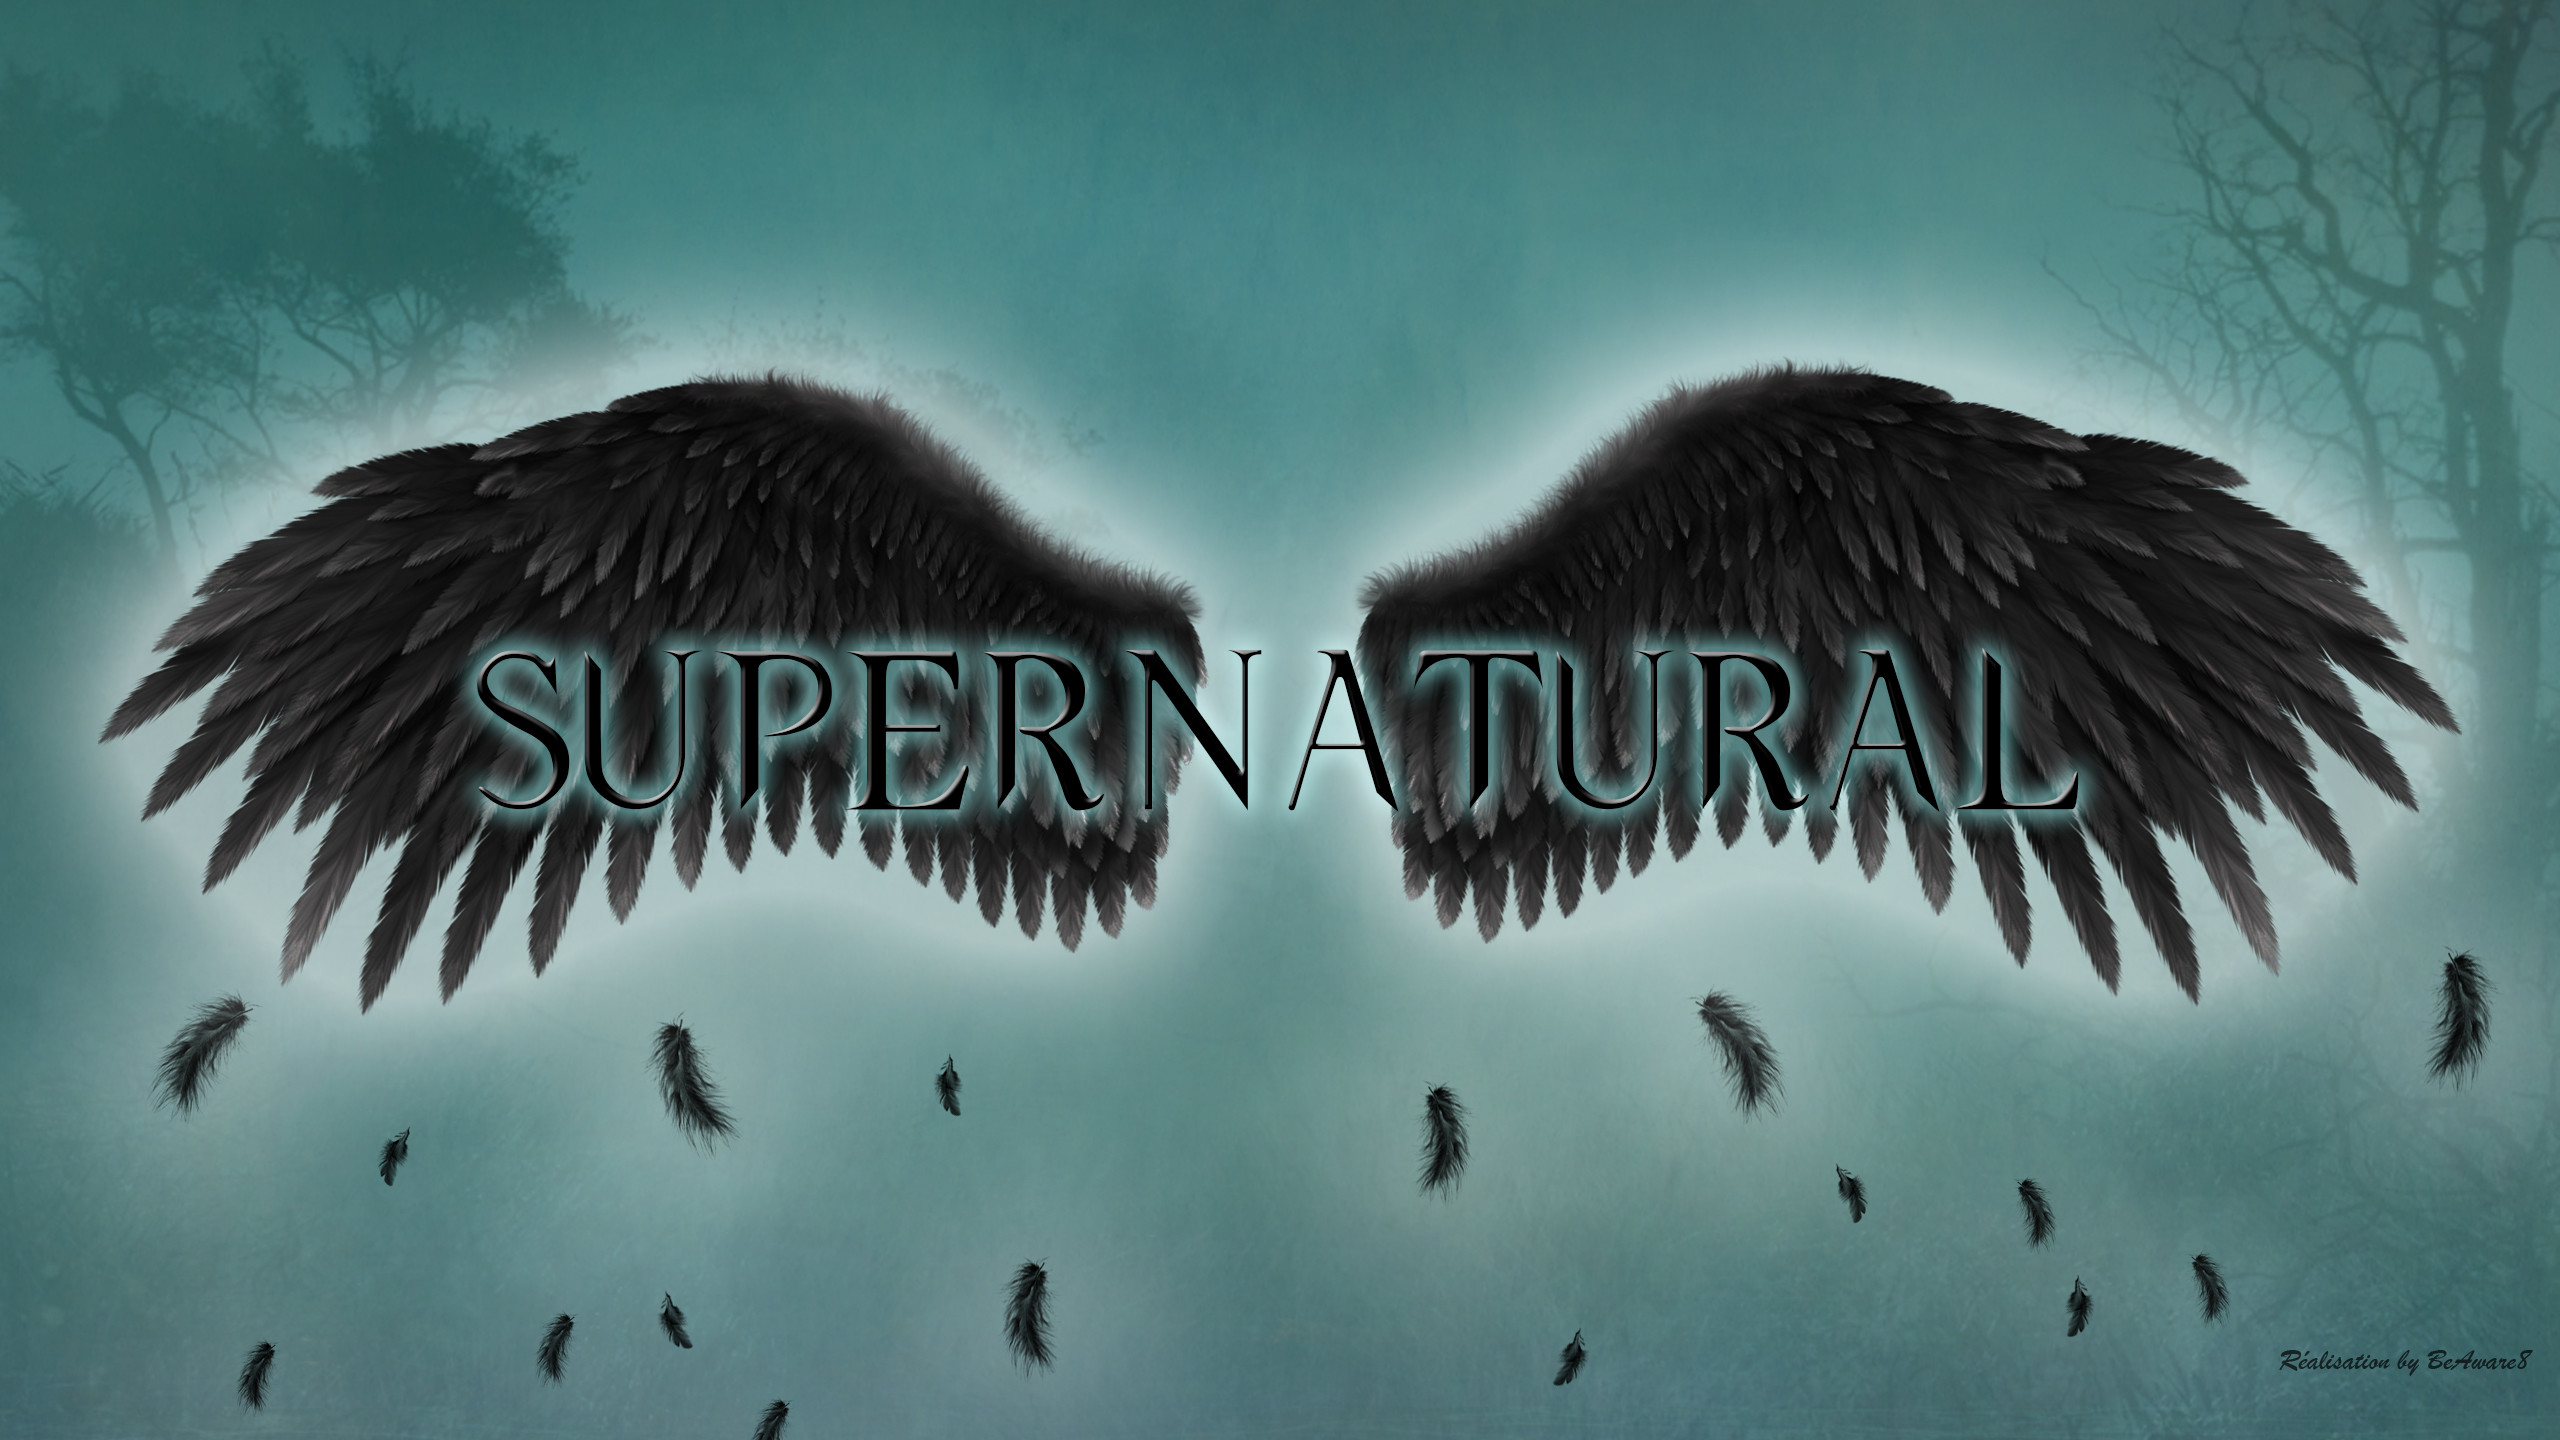 2560x1440 ... Supernatural - the fallen angel wings by BeAware8